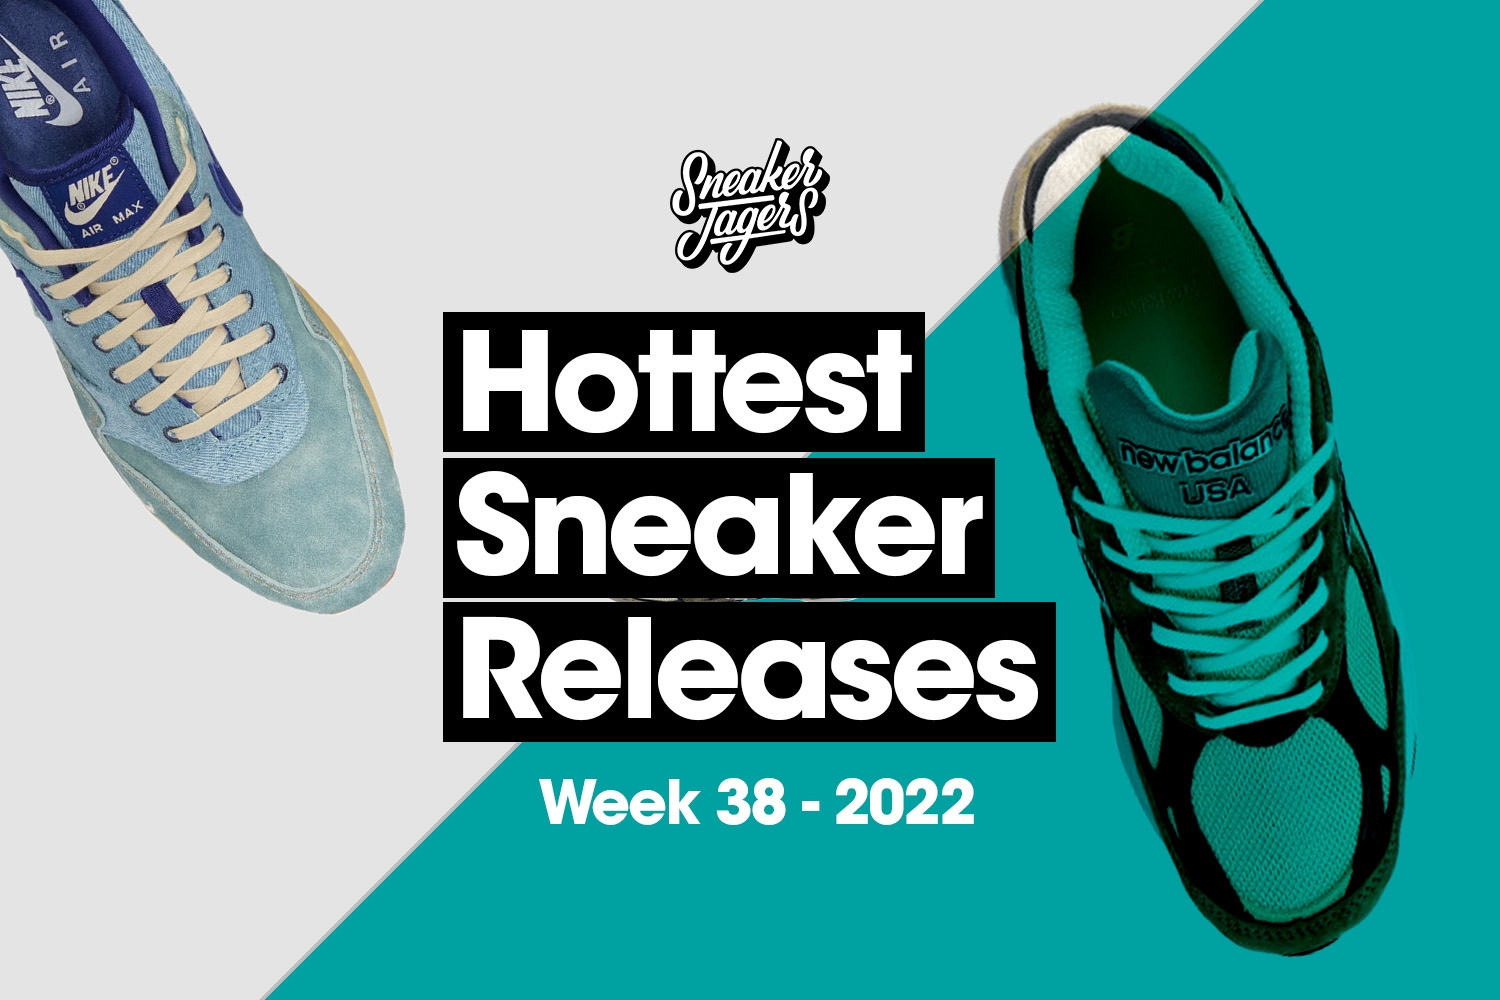 Hottest Sneaker Releases - Week 38